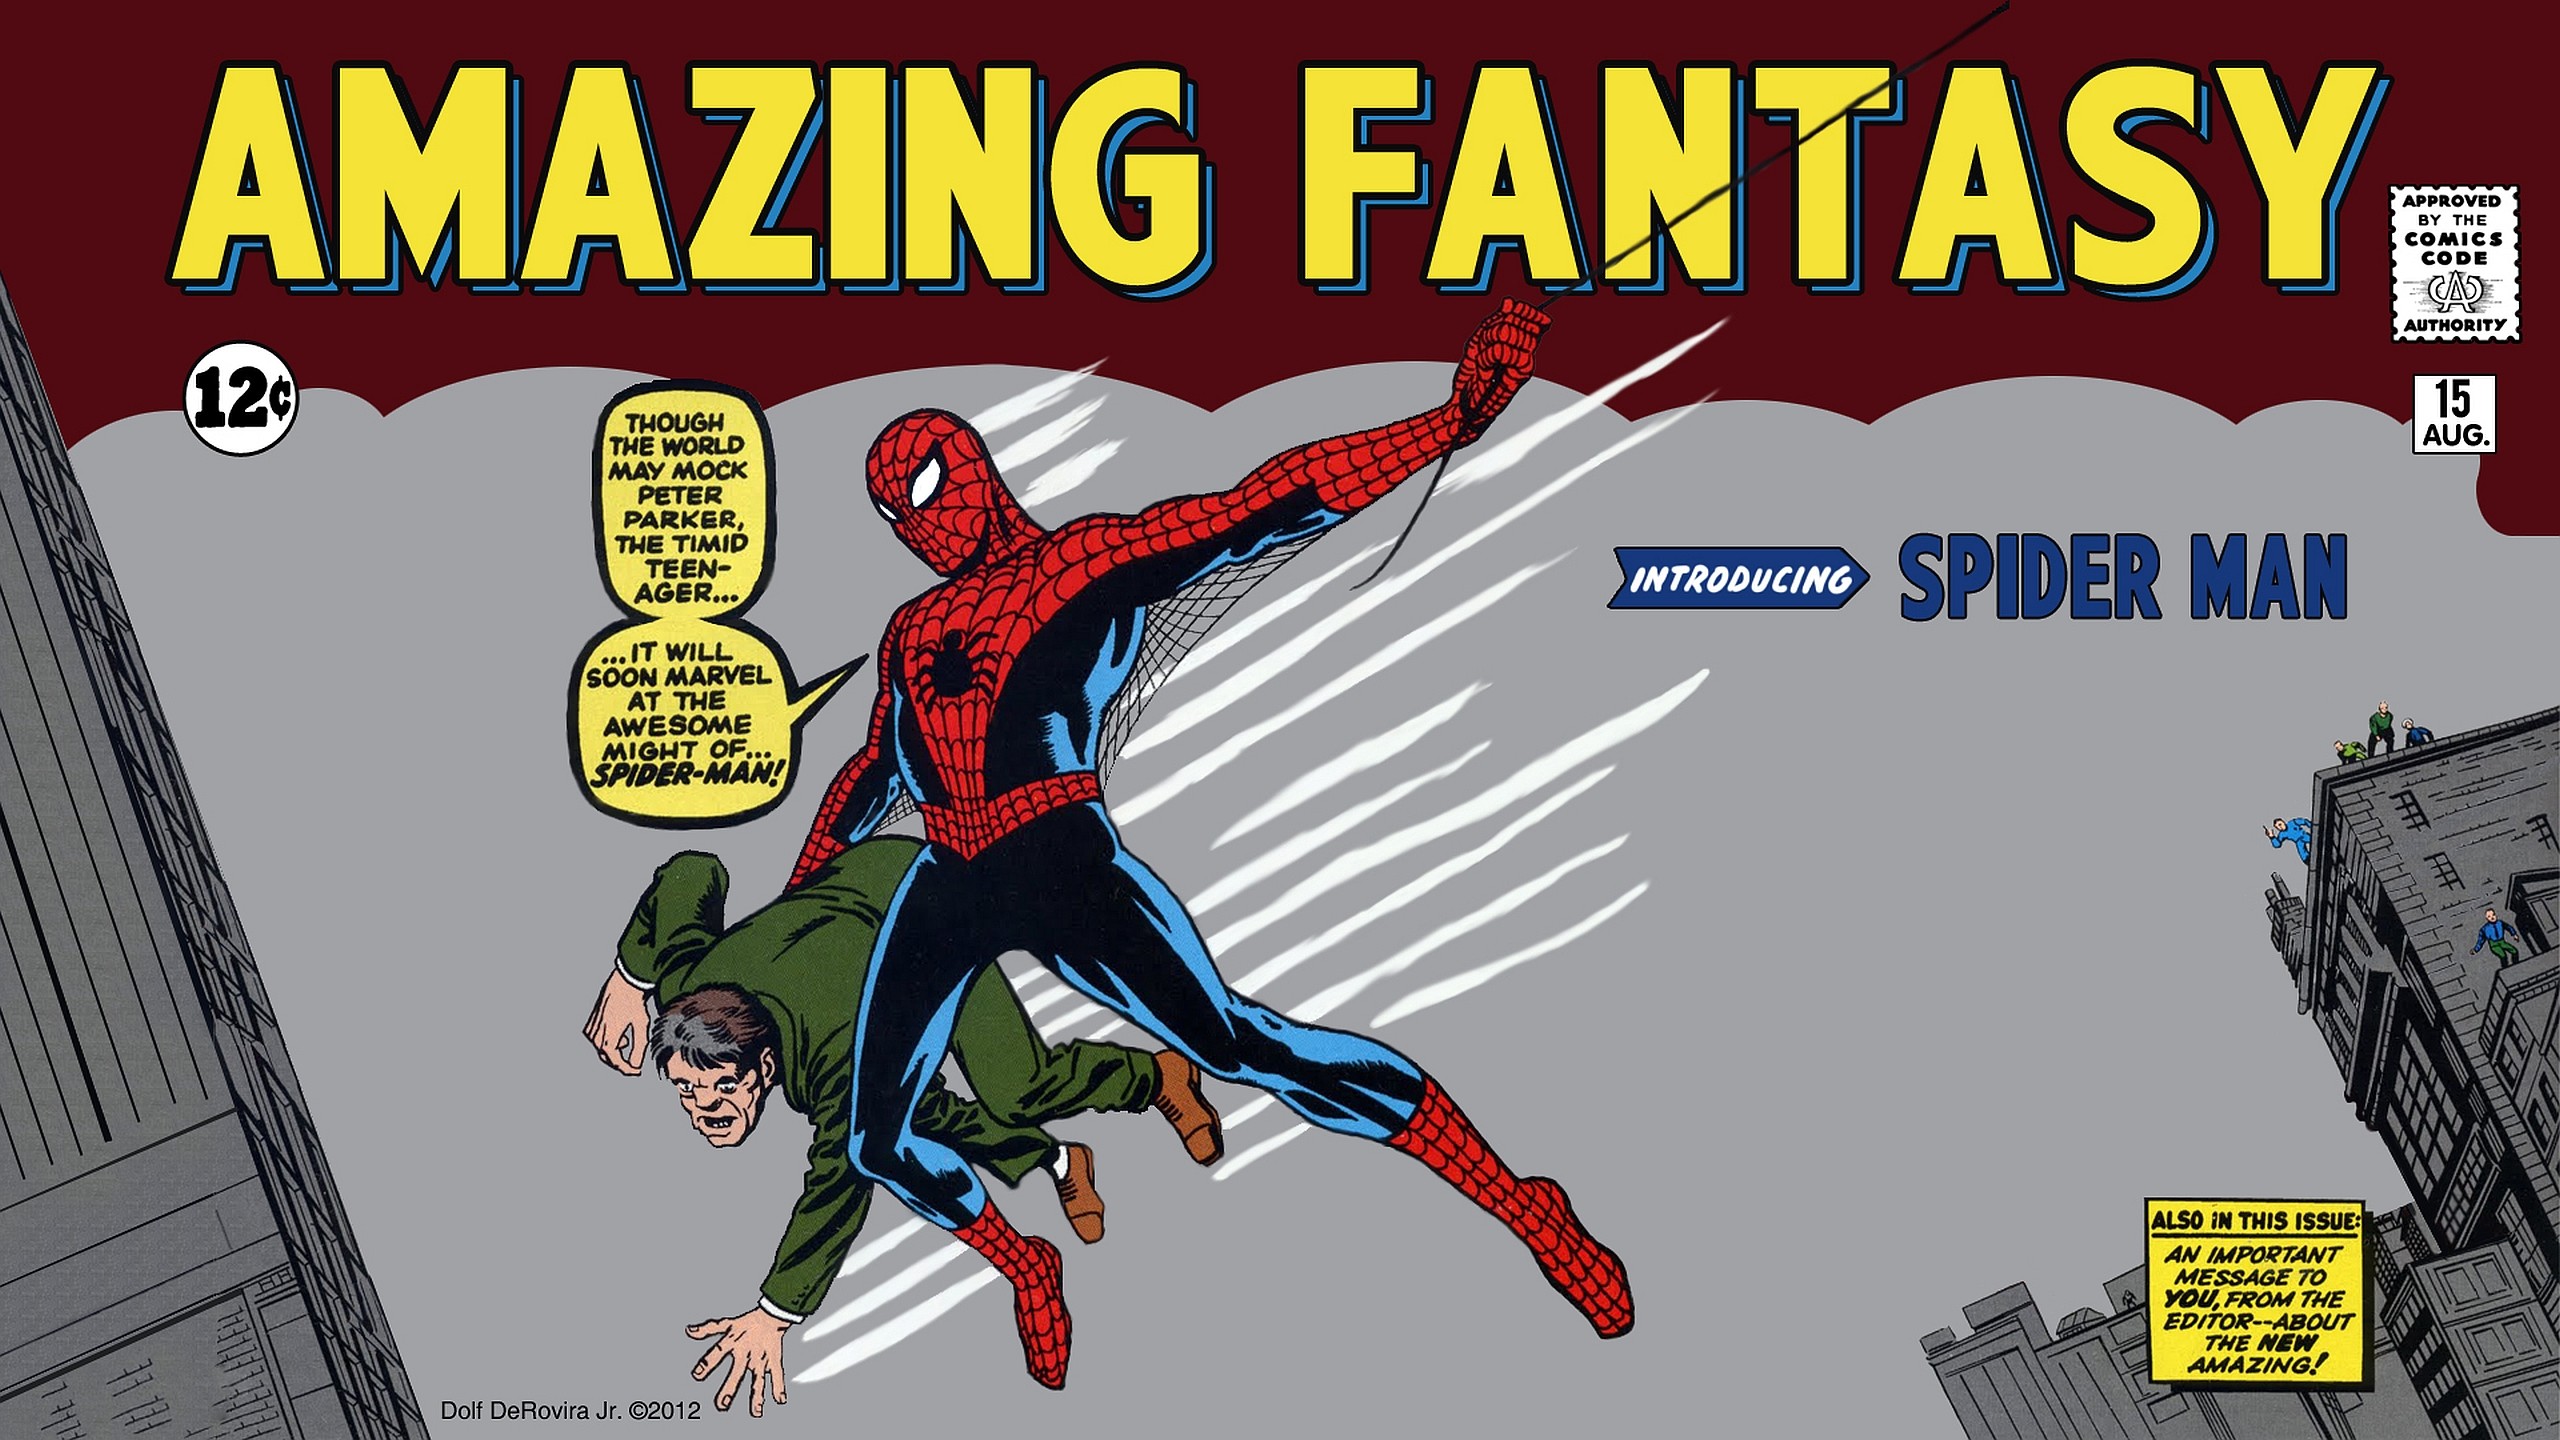 Artistic Comic Comics Spider Man Â - Spider Man Amazing Fantasy 15 - HD Wallpaper 